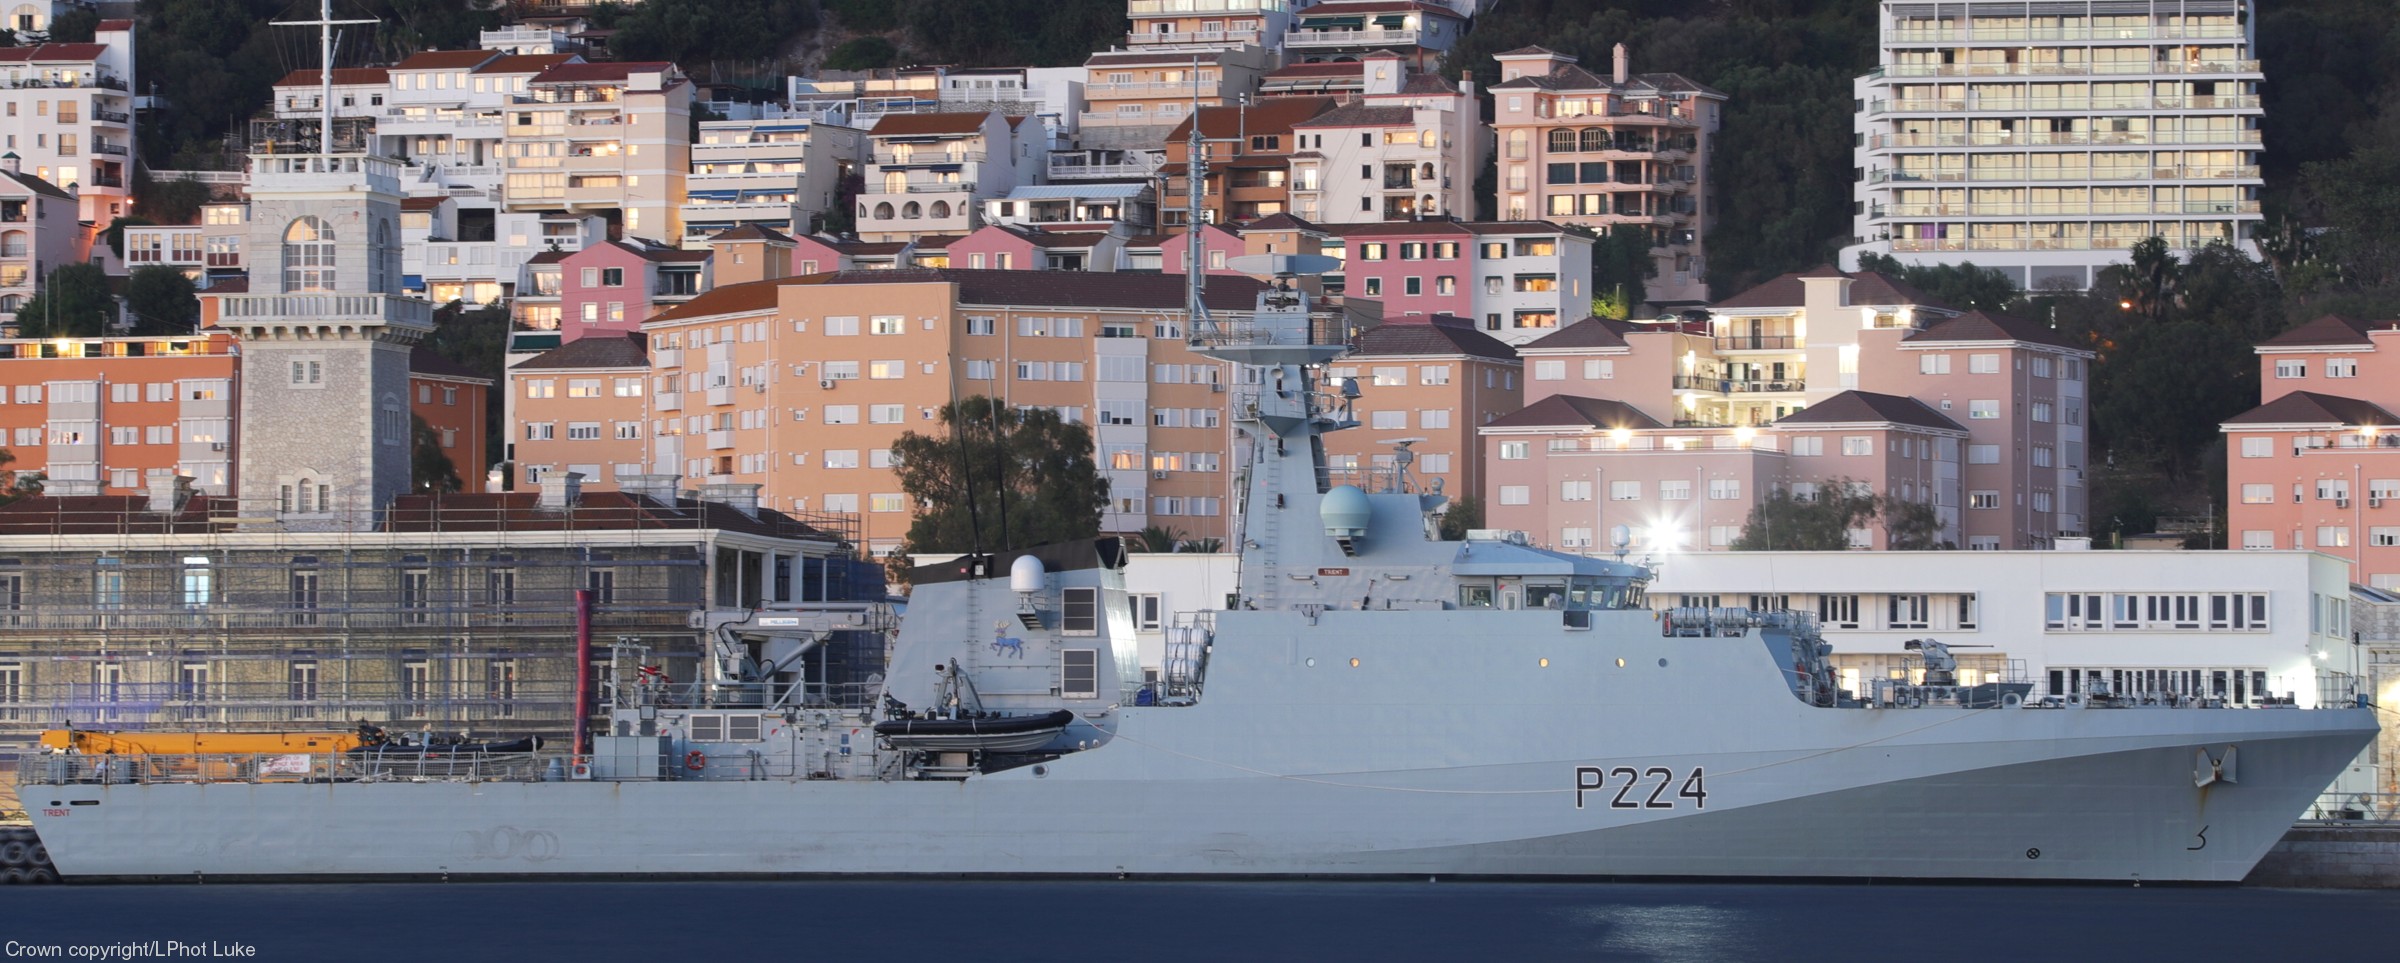 p-224 hms trent river class offshore patrol vessel opv royal navy 20